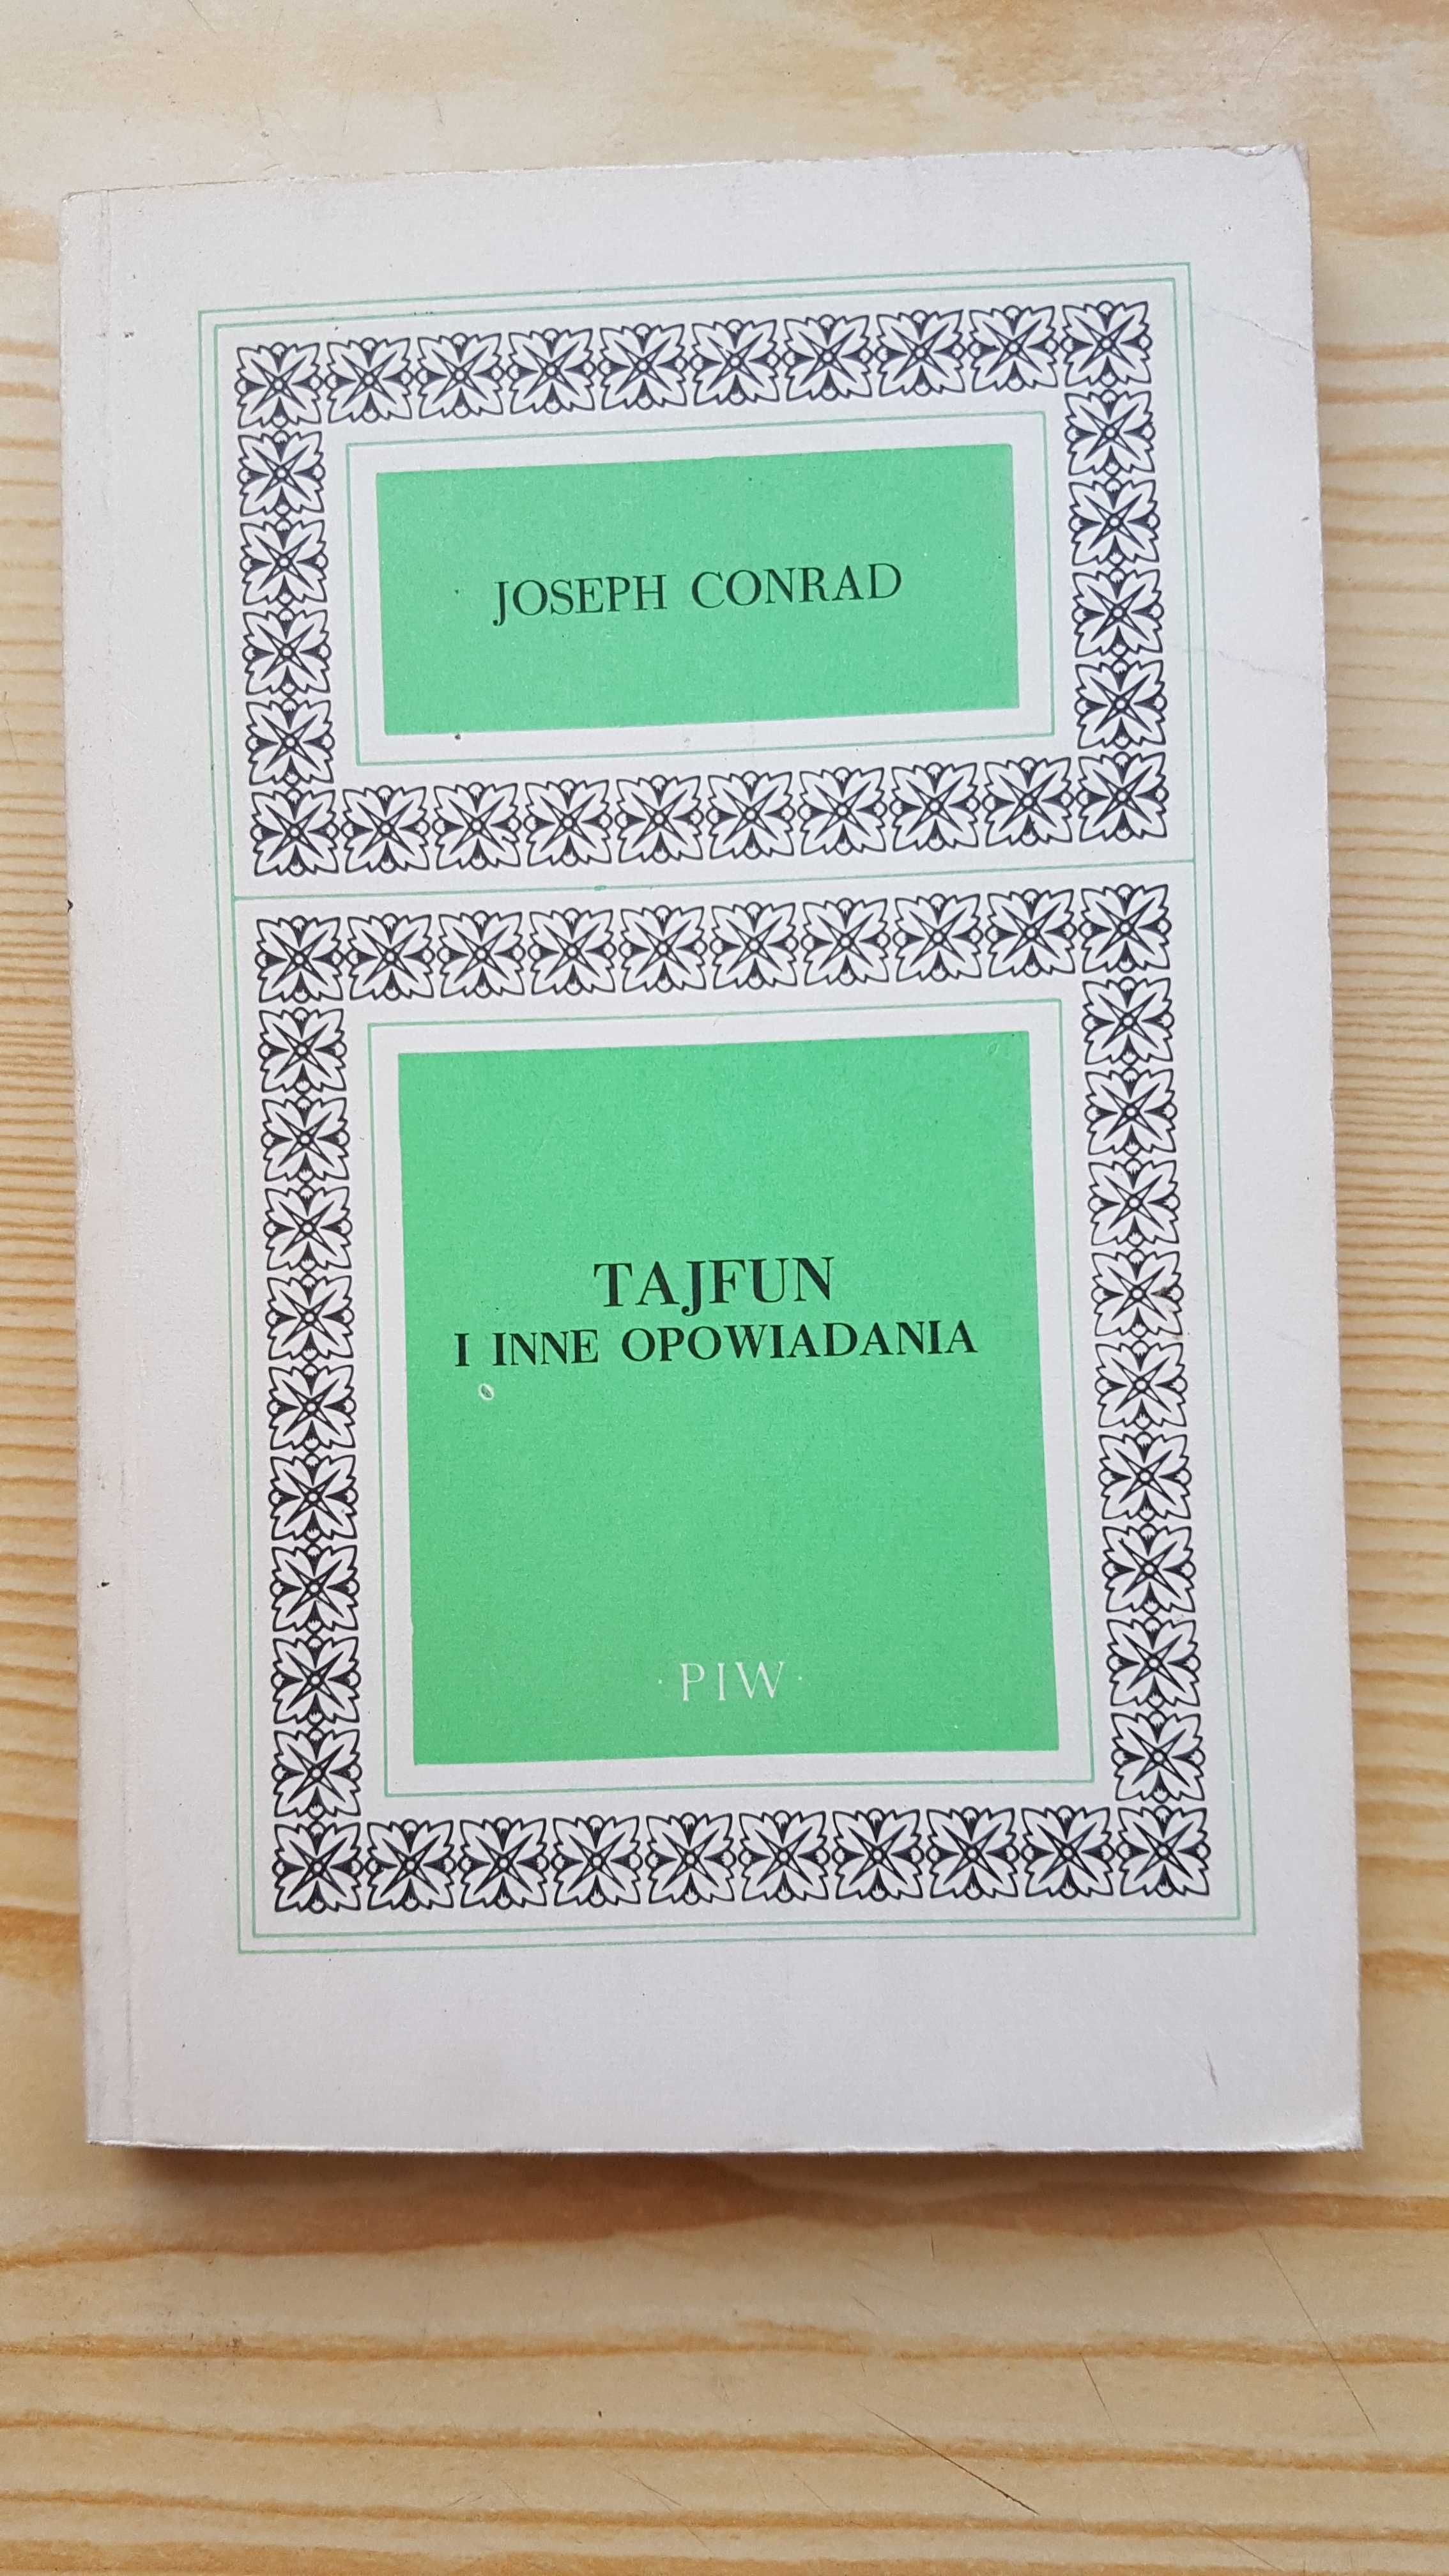 Joseph Conrad "TAJFUN i inne opowiadania" - PIW